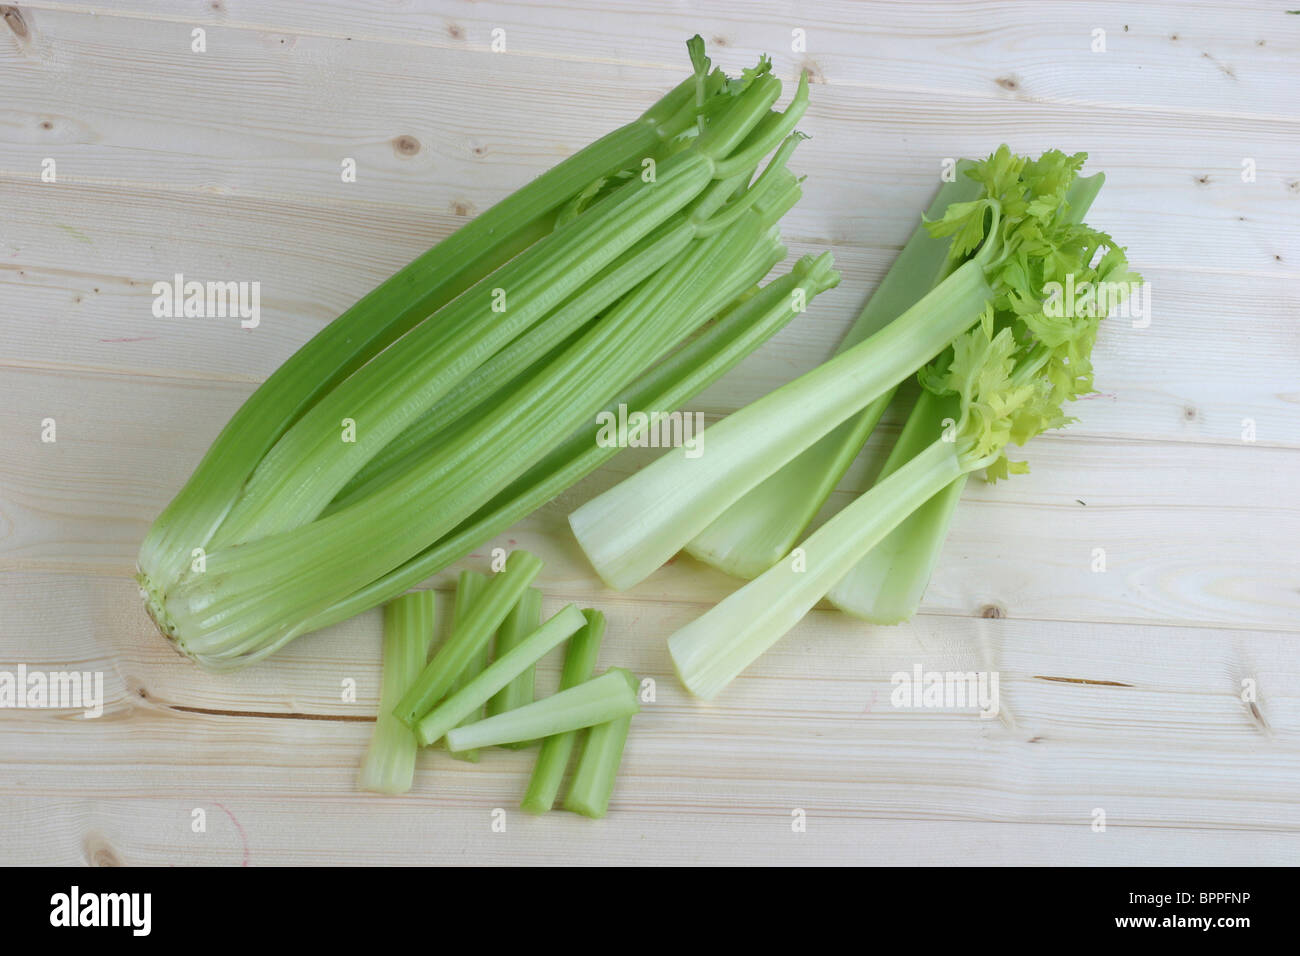 celery stalks Stock Photo